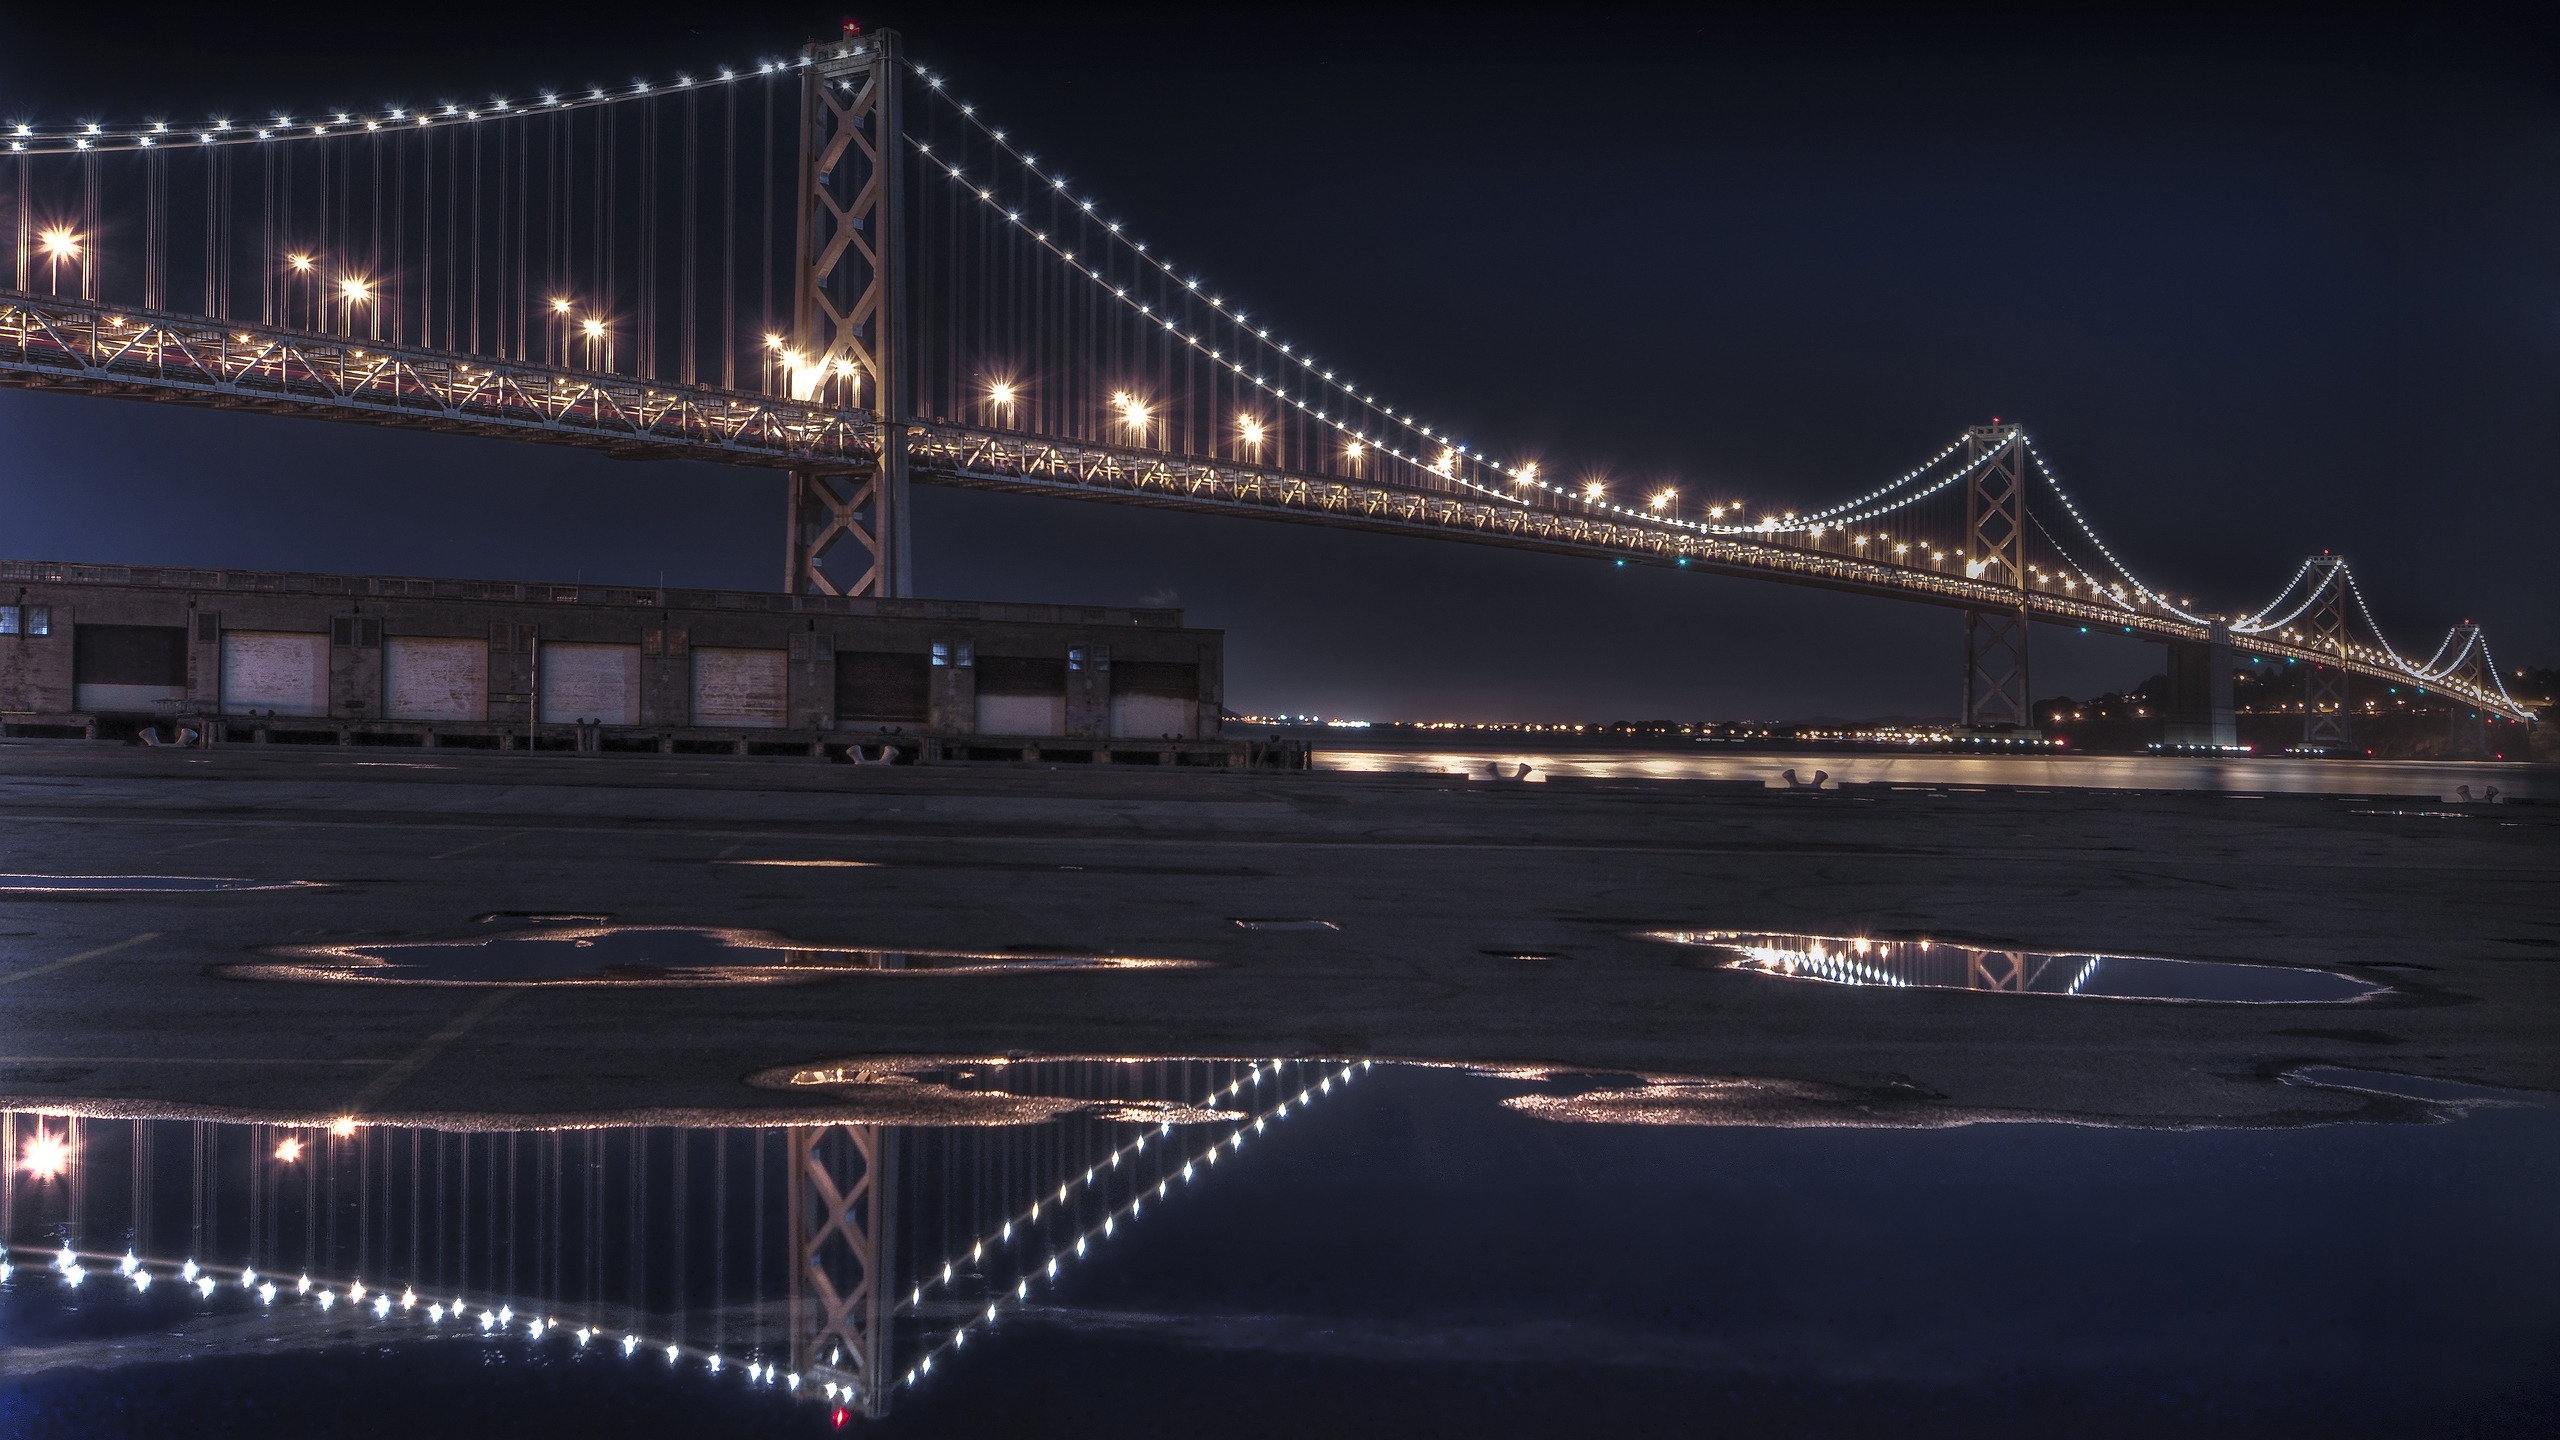 The Bay Bridge Reflecting for 2560x1440 HDTV resolution